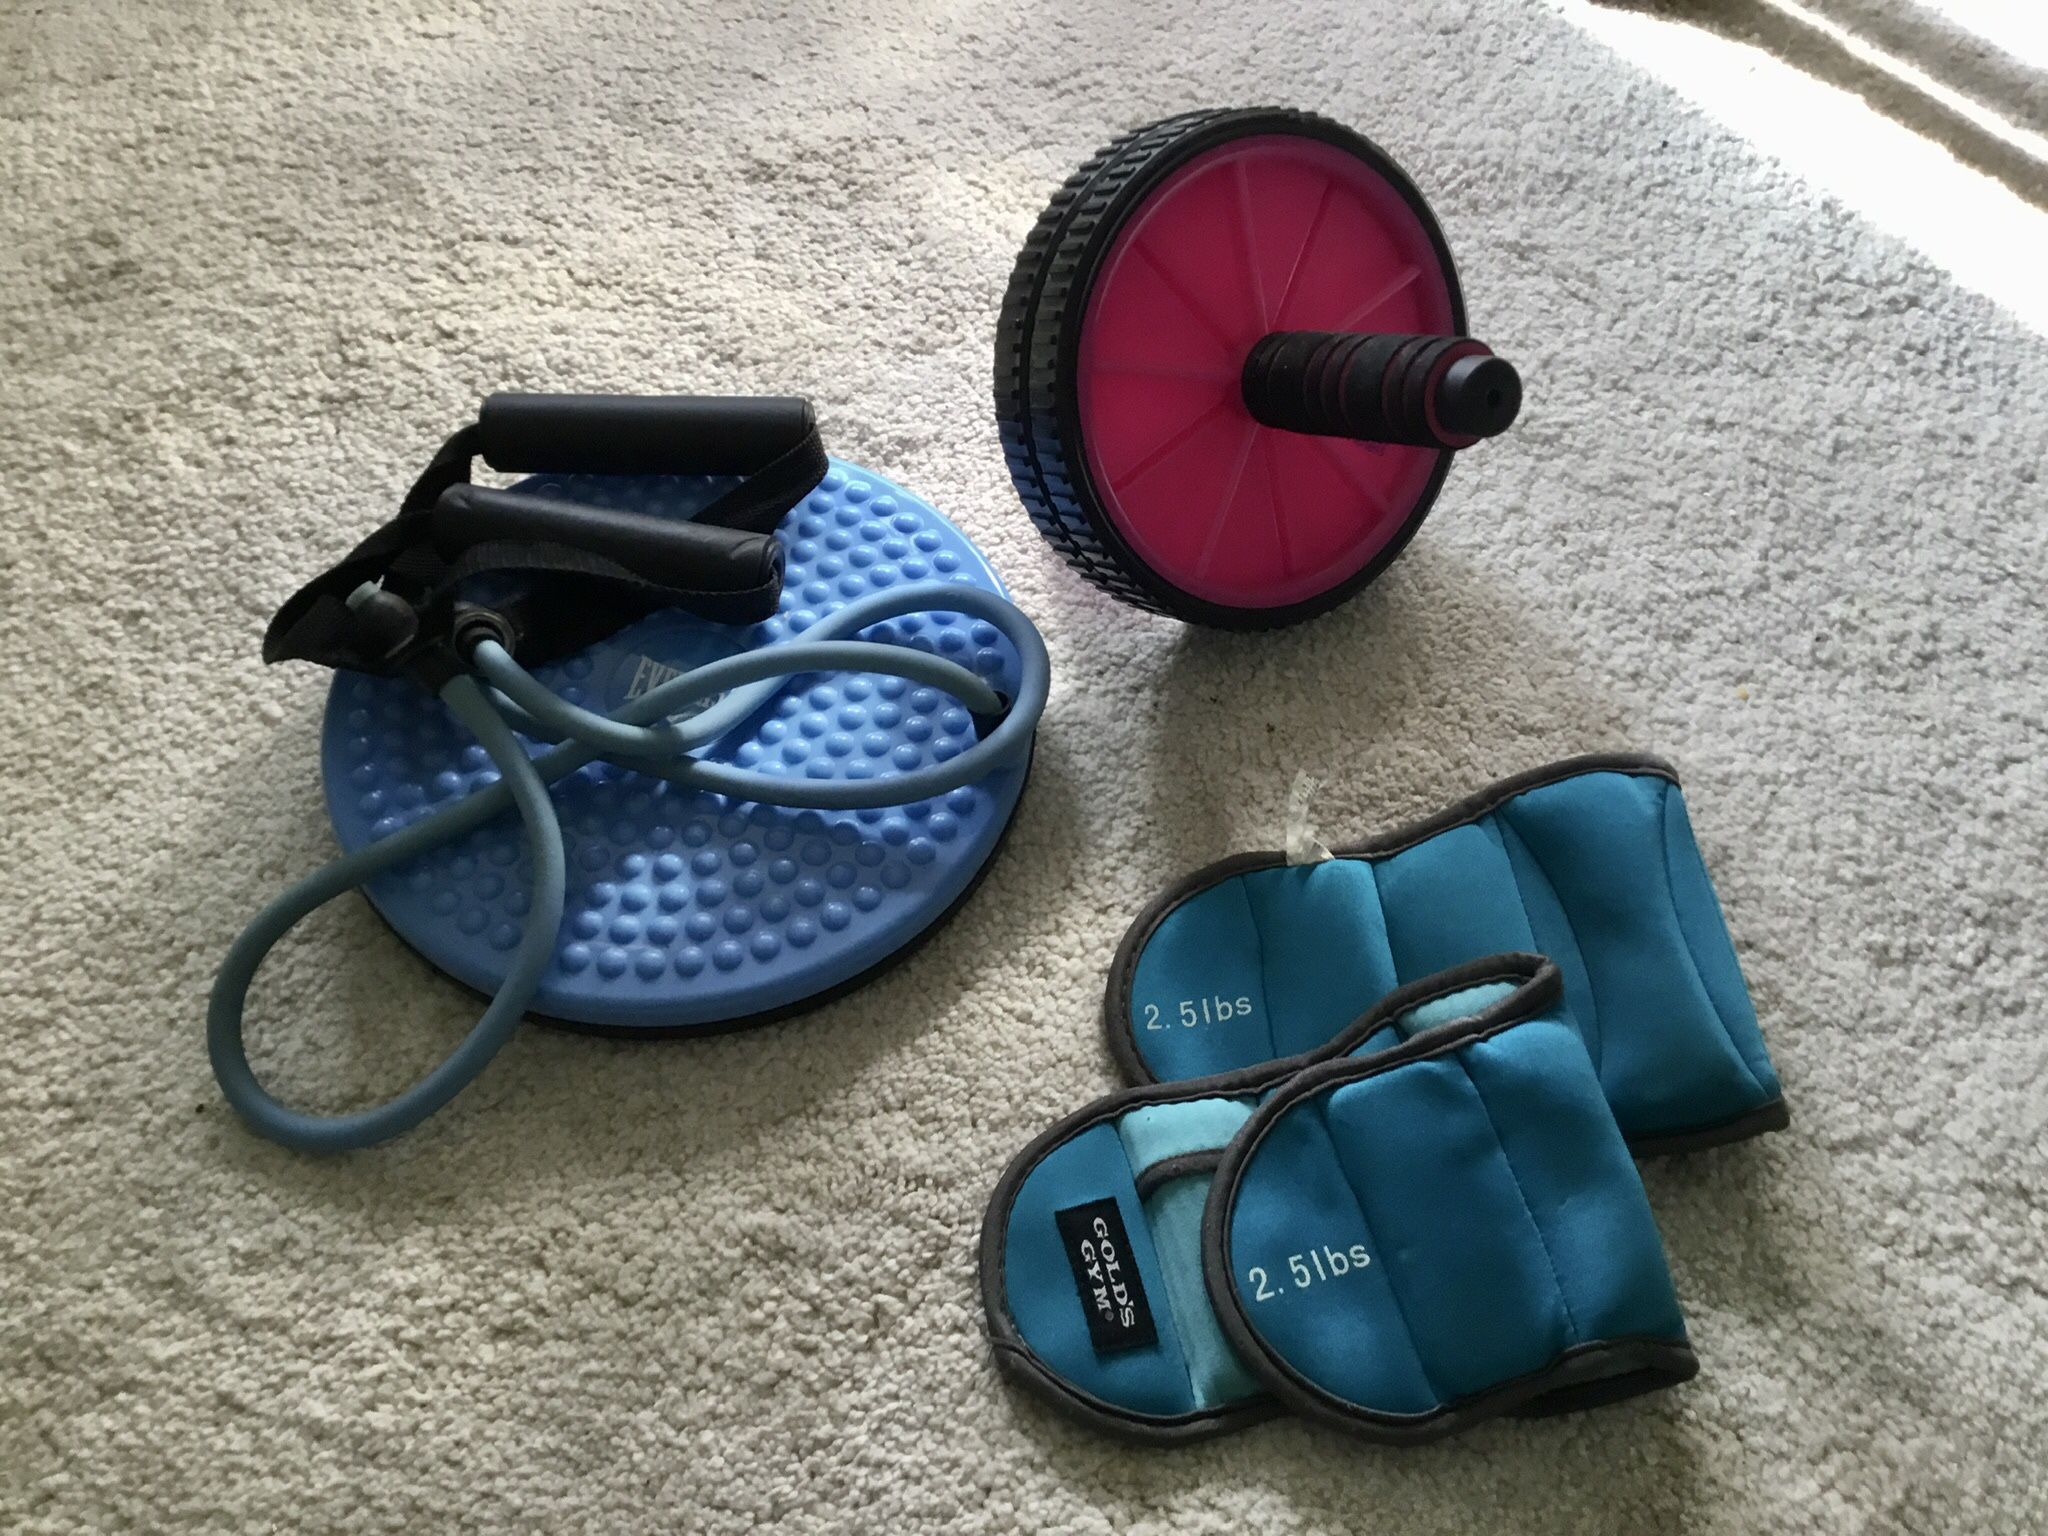 Set Of 3 Exercise Equipment Yoga Pilates